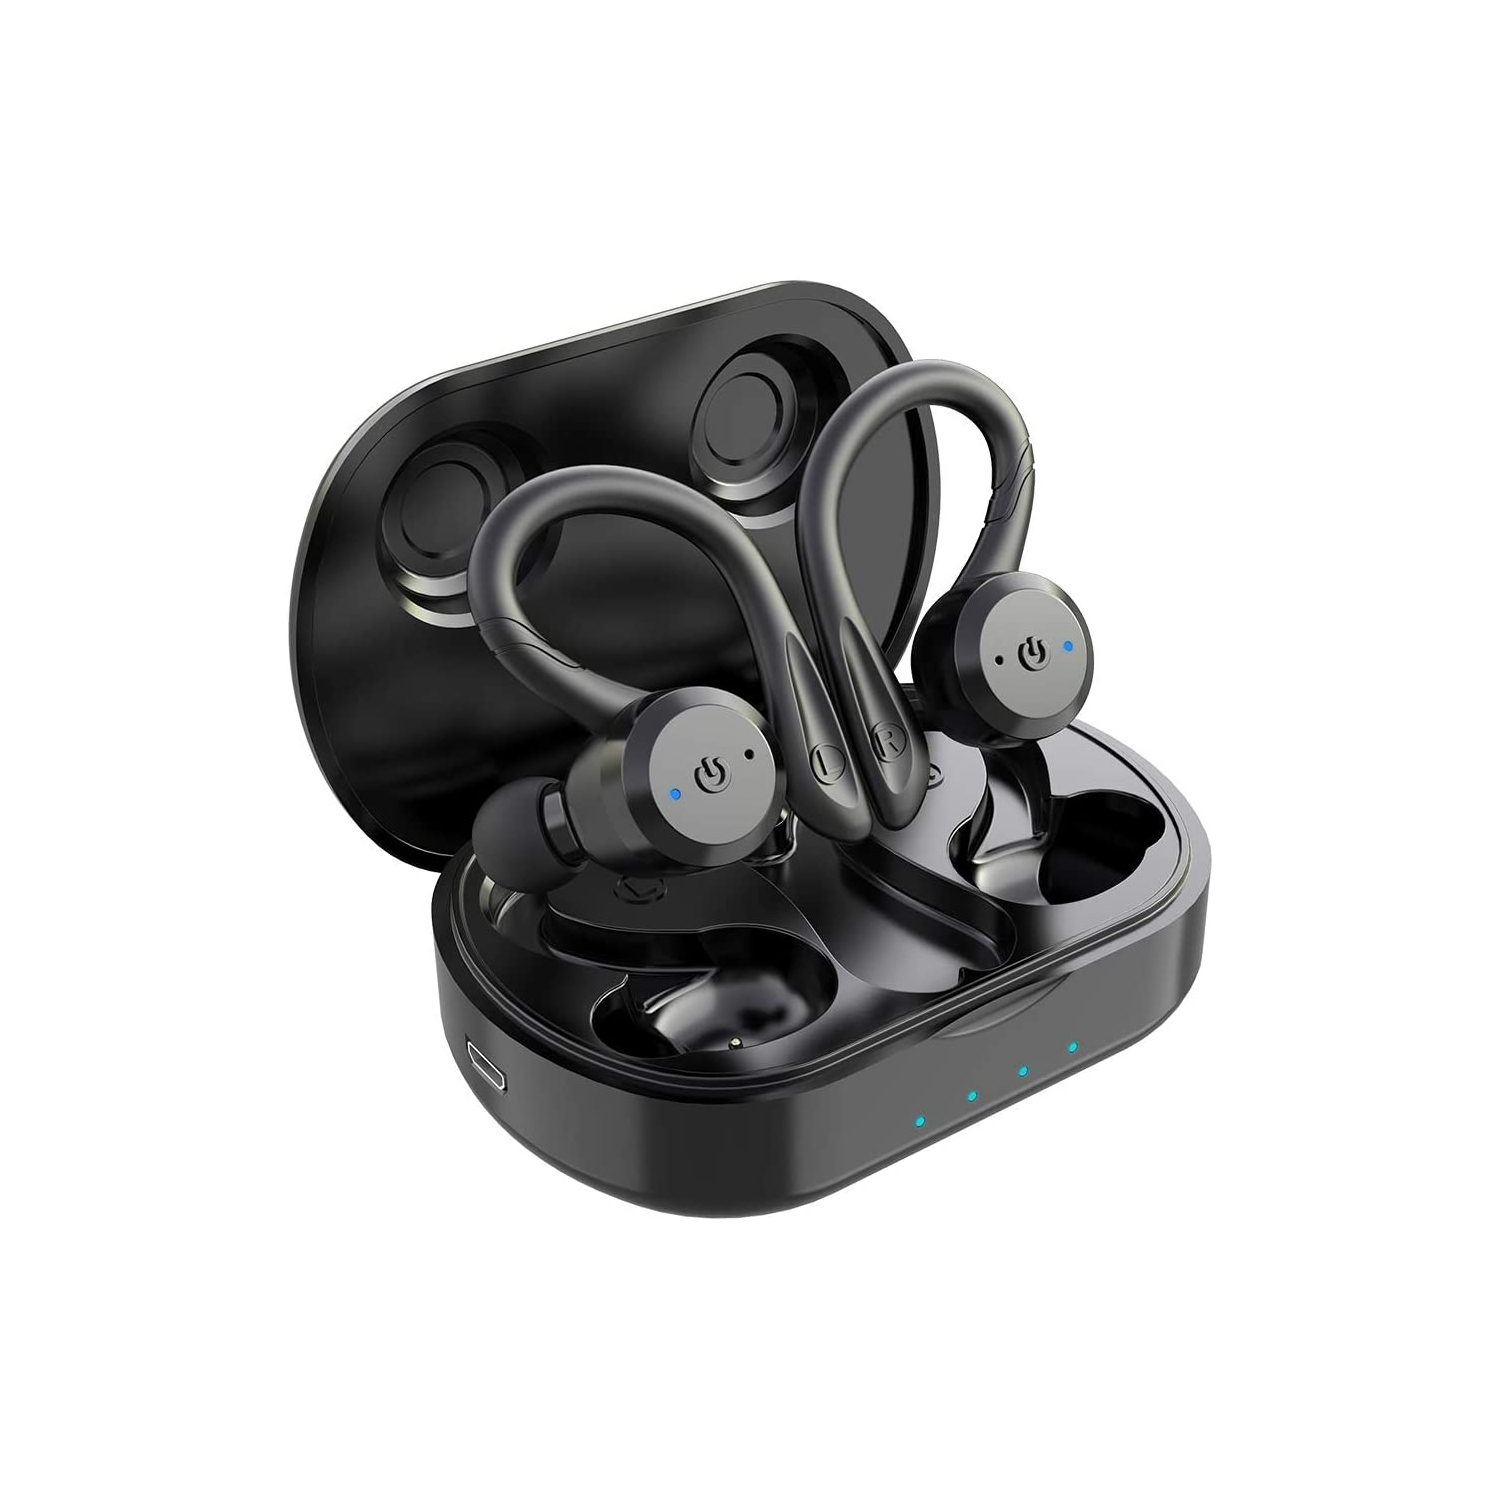 Sport Headphones with Earhook Design, APEKX True Wireless Bluetooth 5.0 Sports Earbuds, IPX7 Waterproof Stereo Sound, Built-in Mic Earphones with Portable Charging Case(Black)